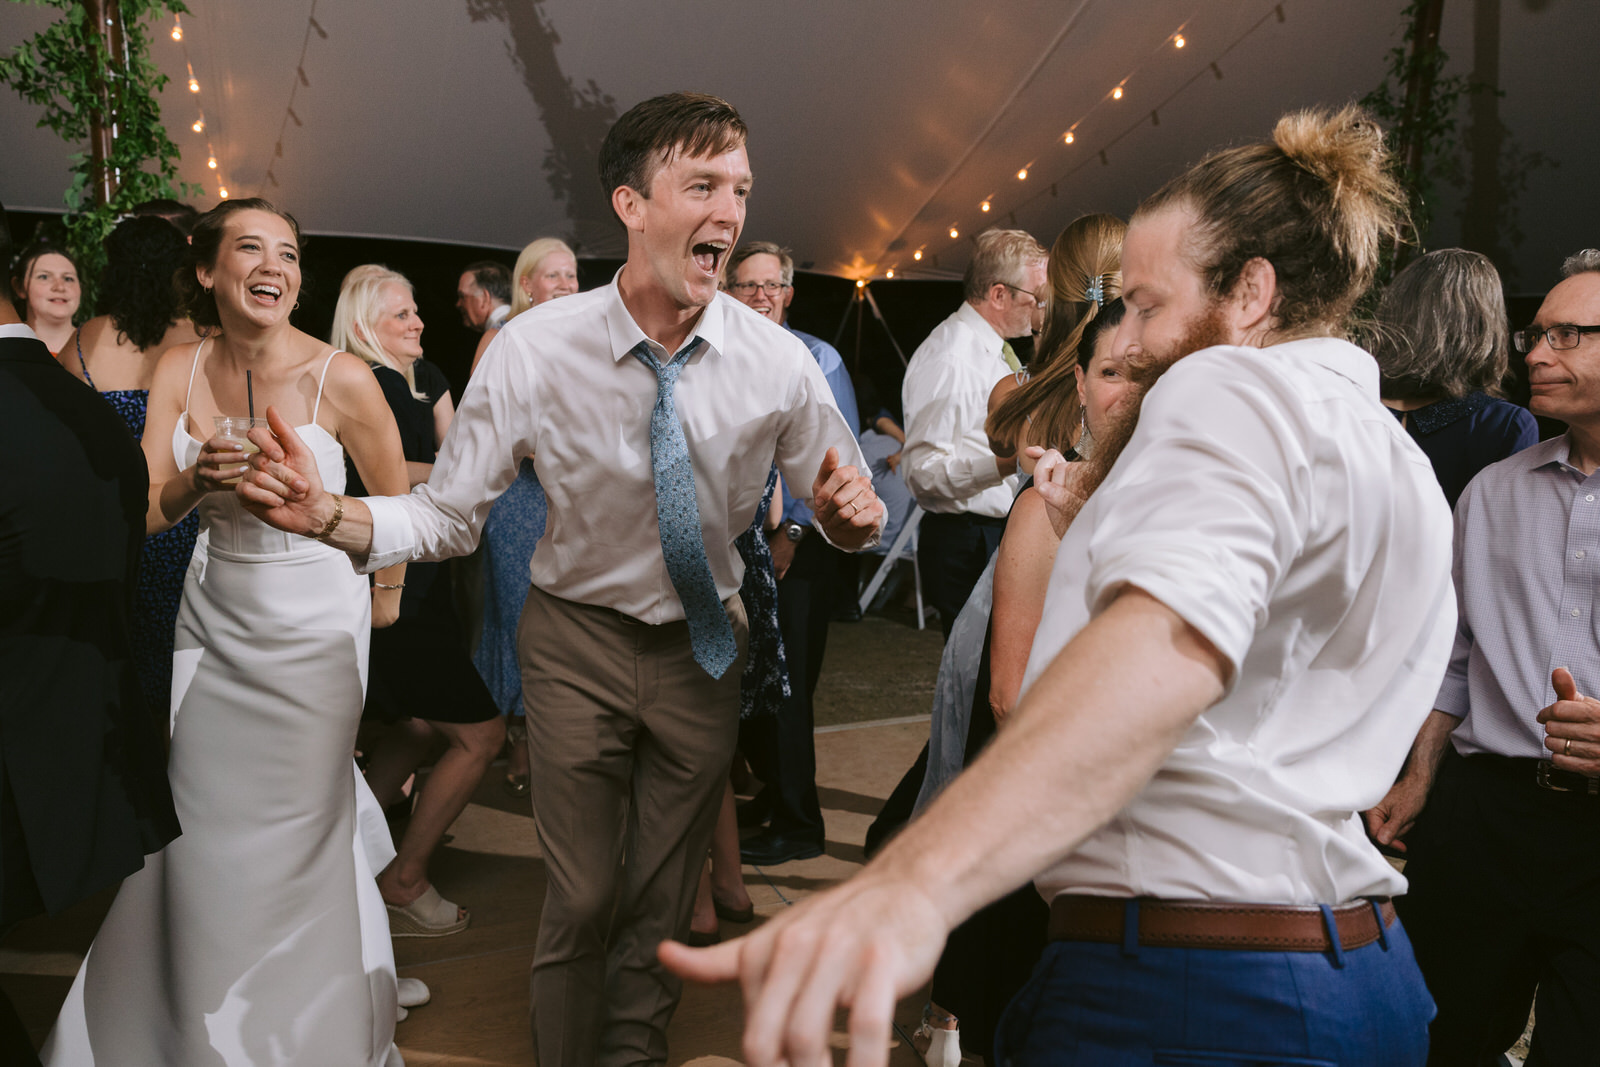 dance floor photos alworth manor wedding